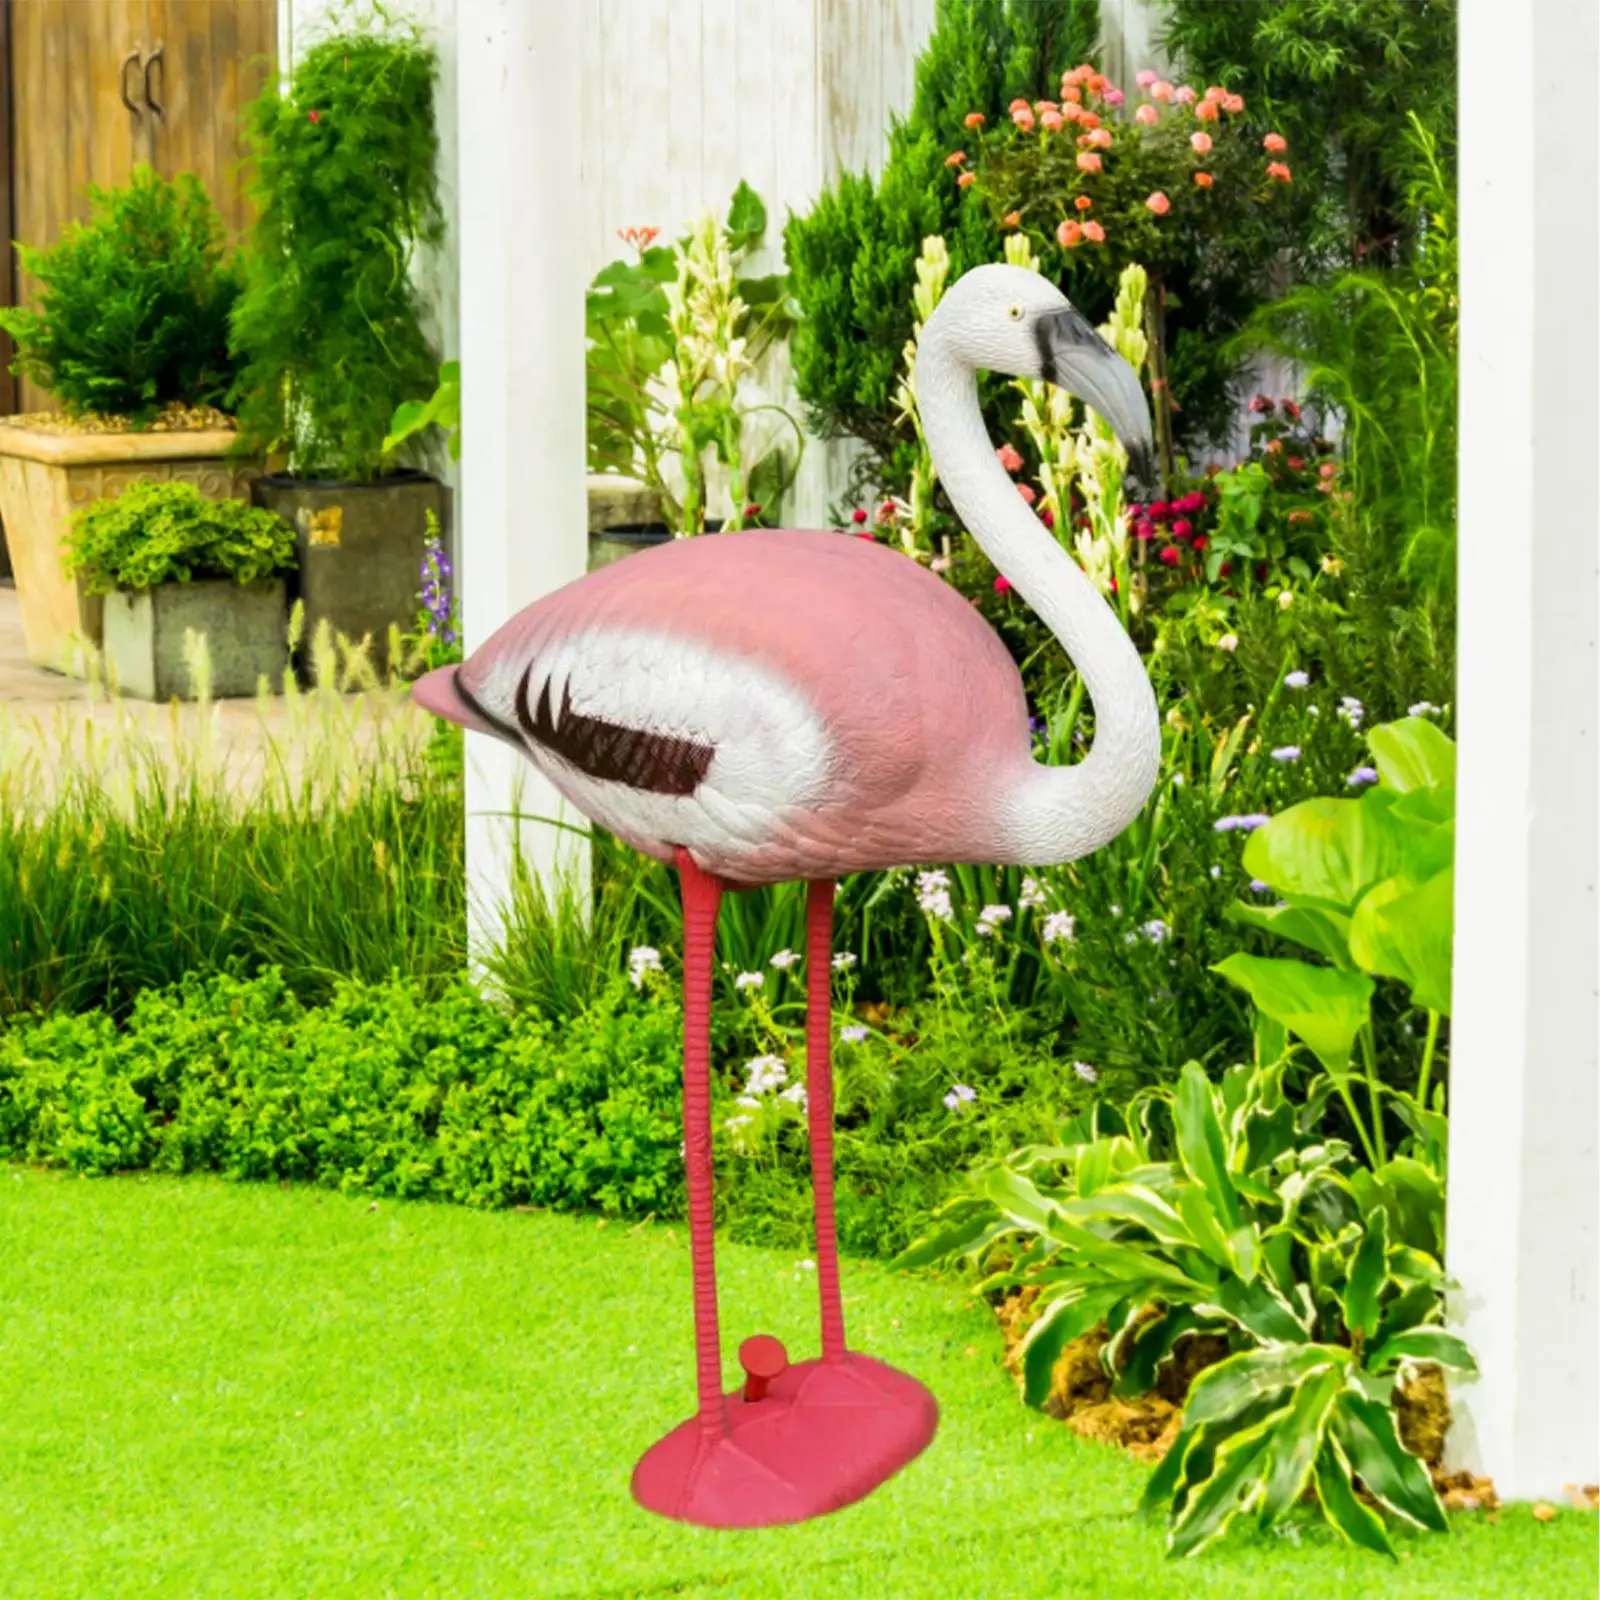 

Flamingo Garden Statue Outdoor Decor Decorative Housewarming Bird Figurine Sculpture for Backyard Yard Flower Beds Lawn